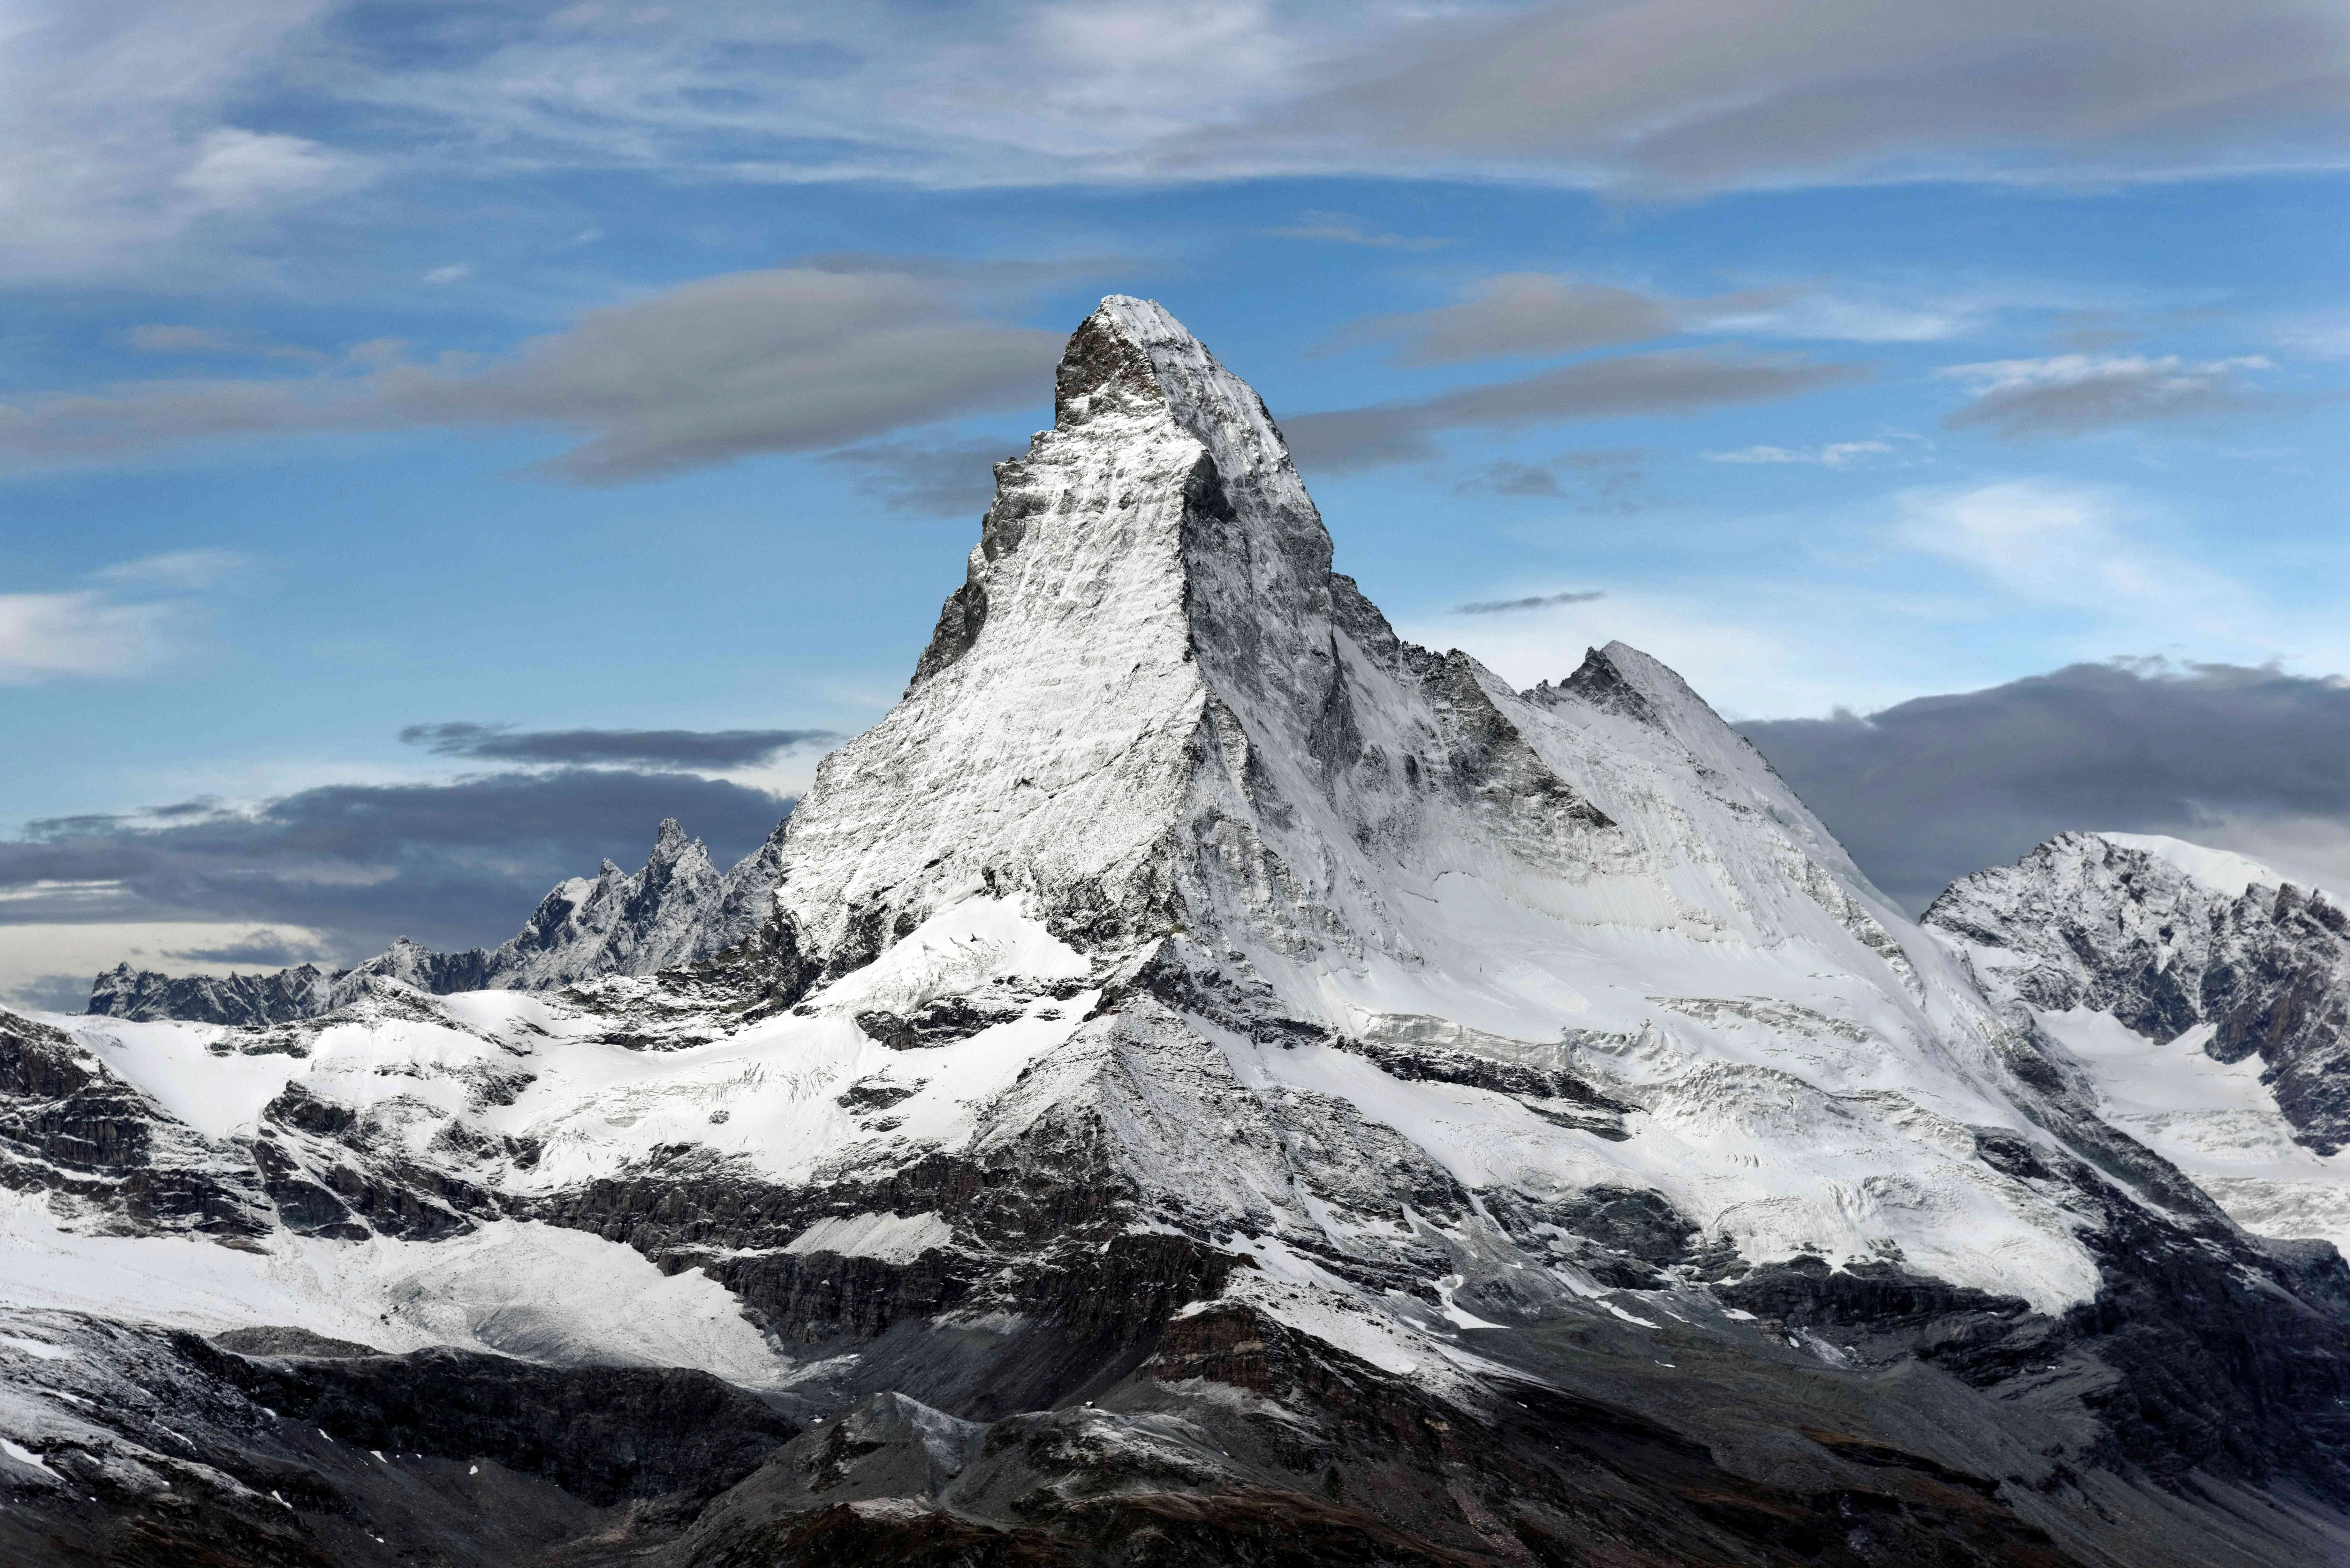 The Matterhorn-Switzerland in Switzerland, Europe | Mountains - Rated 4.9